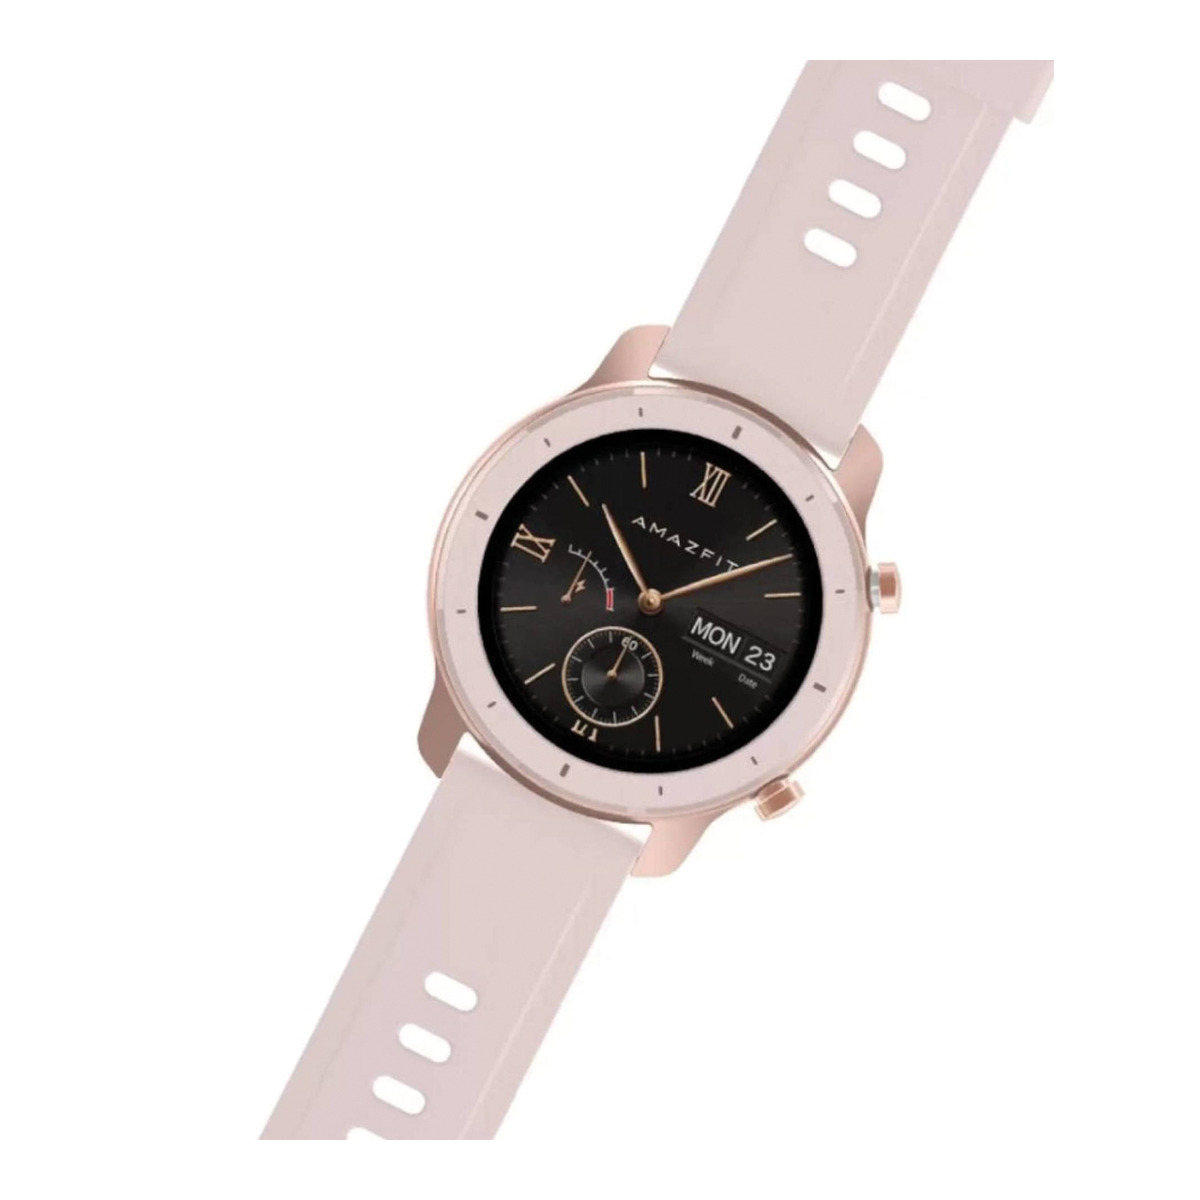 Pink Cherry mm, GTR Aluminium Silikon, 42 118 Blossom A1910 AMAZFIT + 75 PINK mm Smartwatch